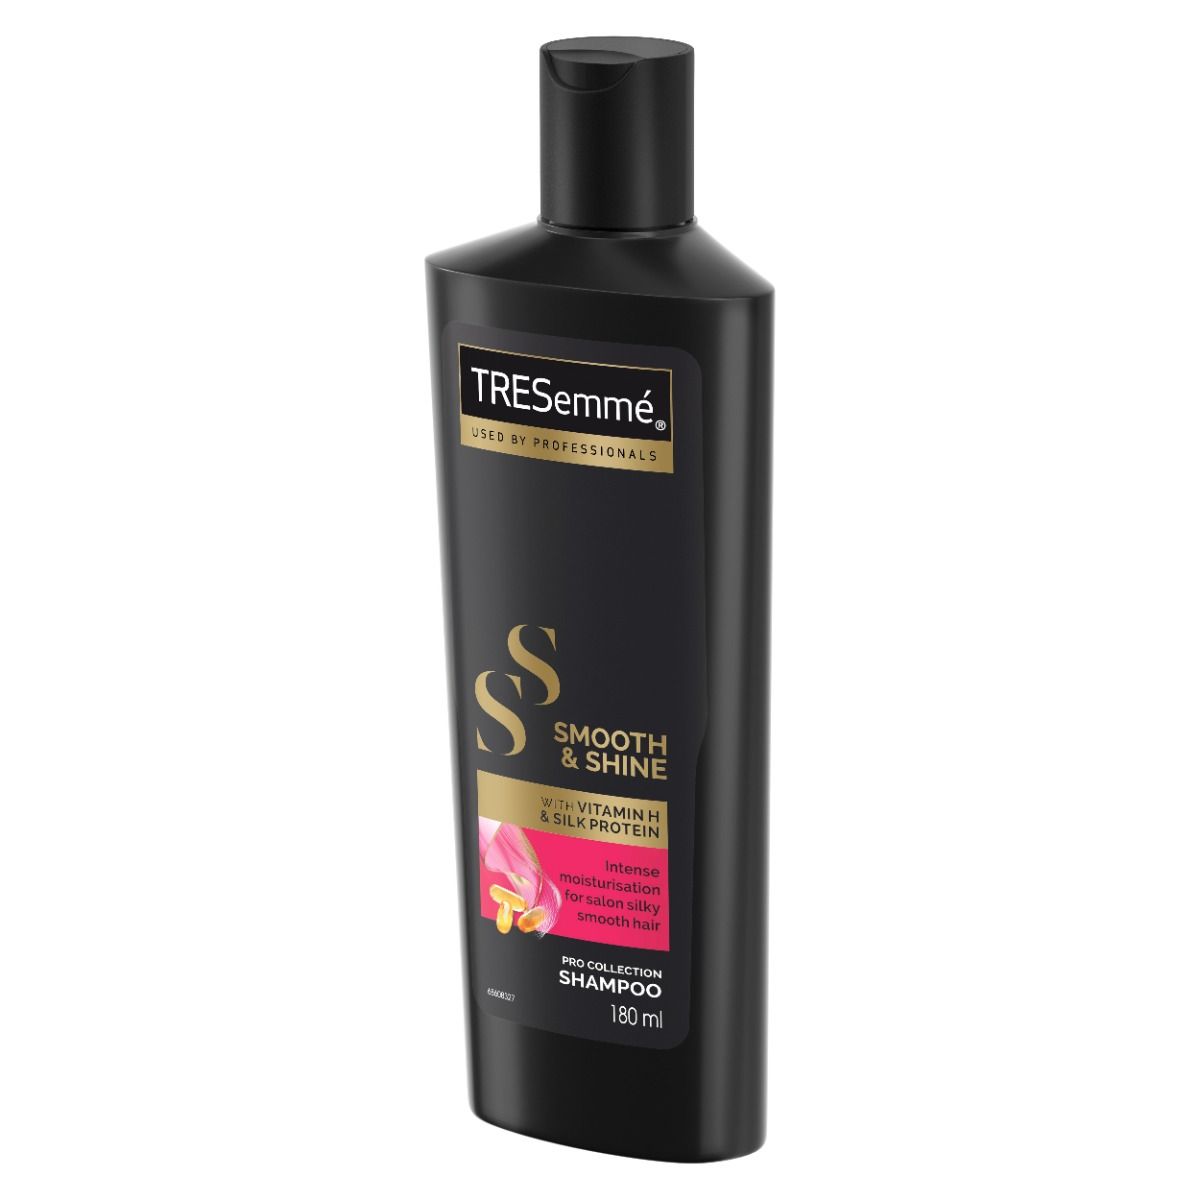 Tresemme Smooth & Shine Shampoo, 180 ml, Pack of 1 